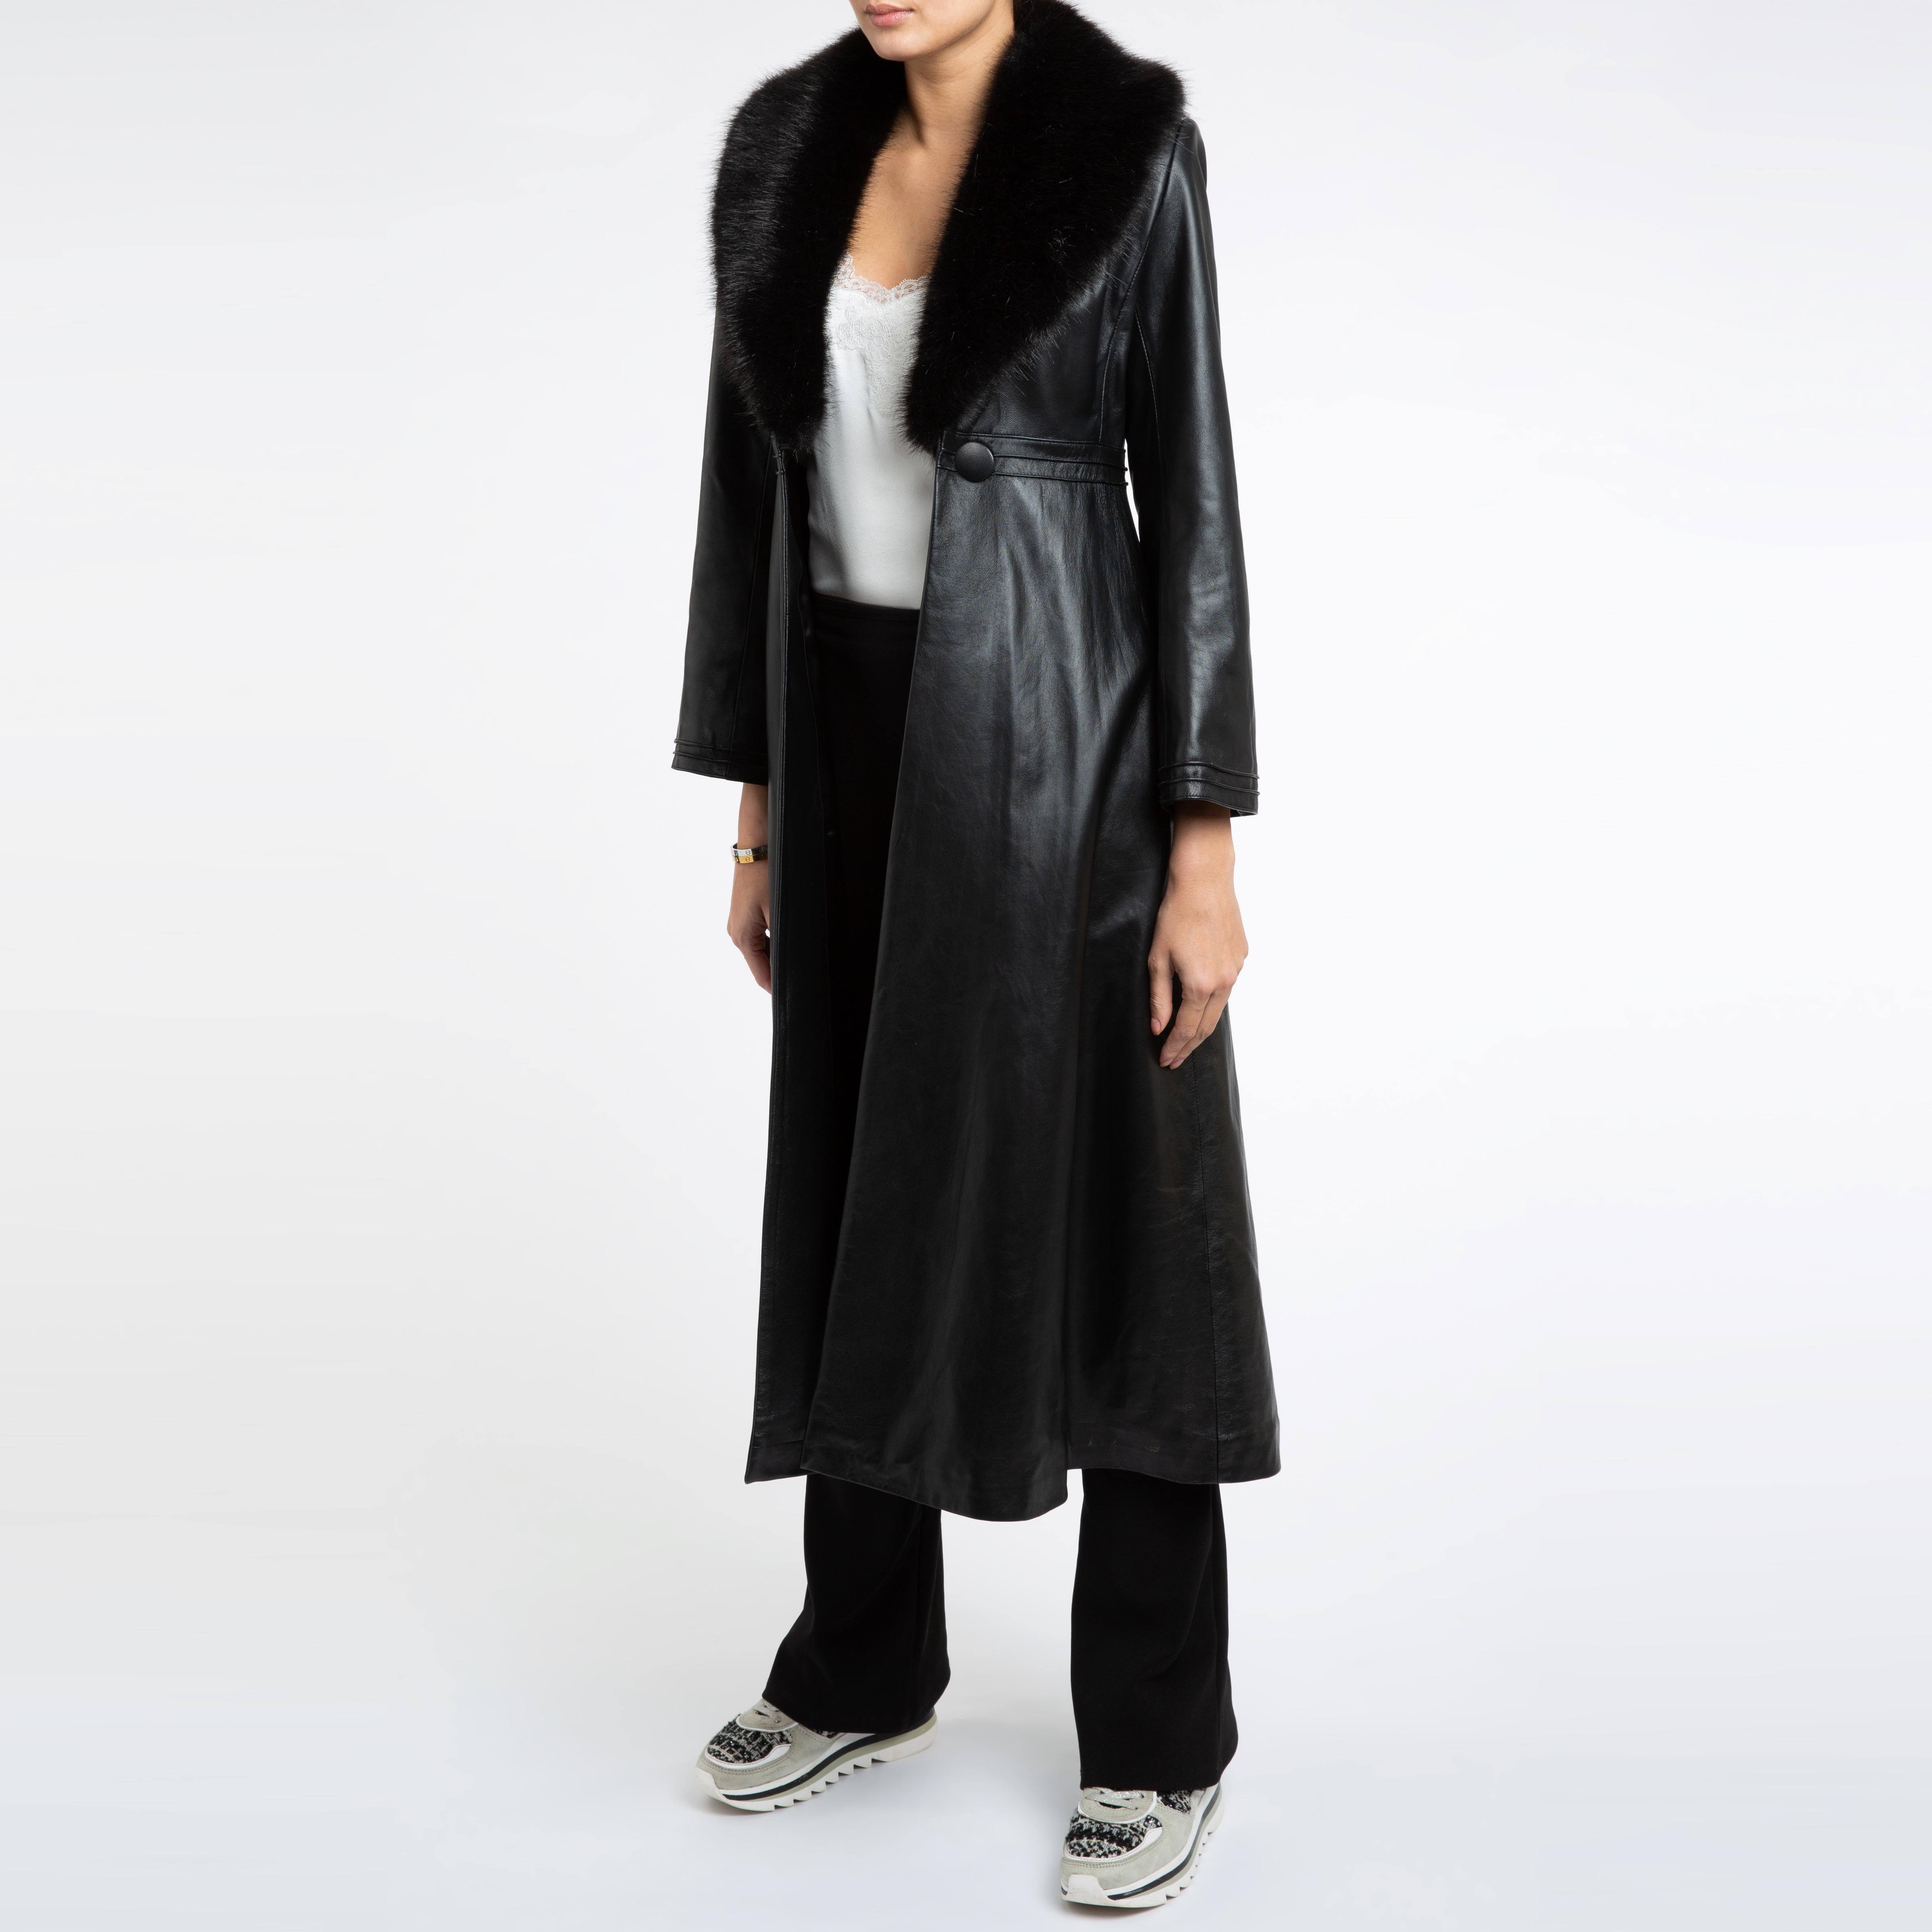 Women's Verheyen London Edward Leather Coat with Faux Fur Collar in Black - Size uk 14 For Sale